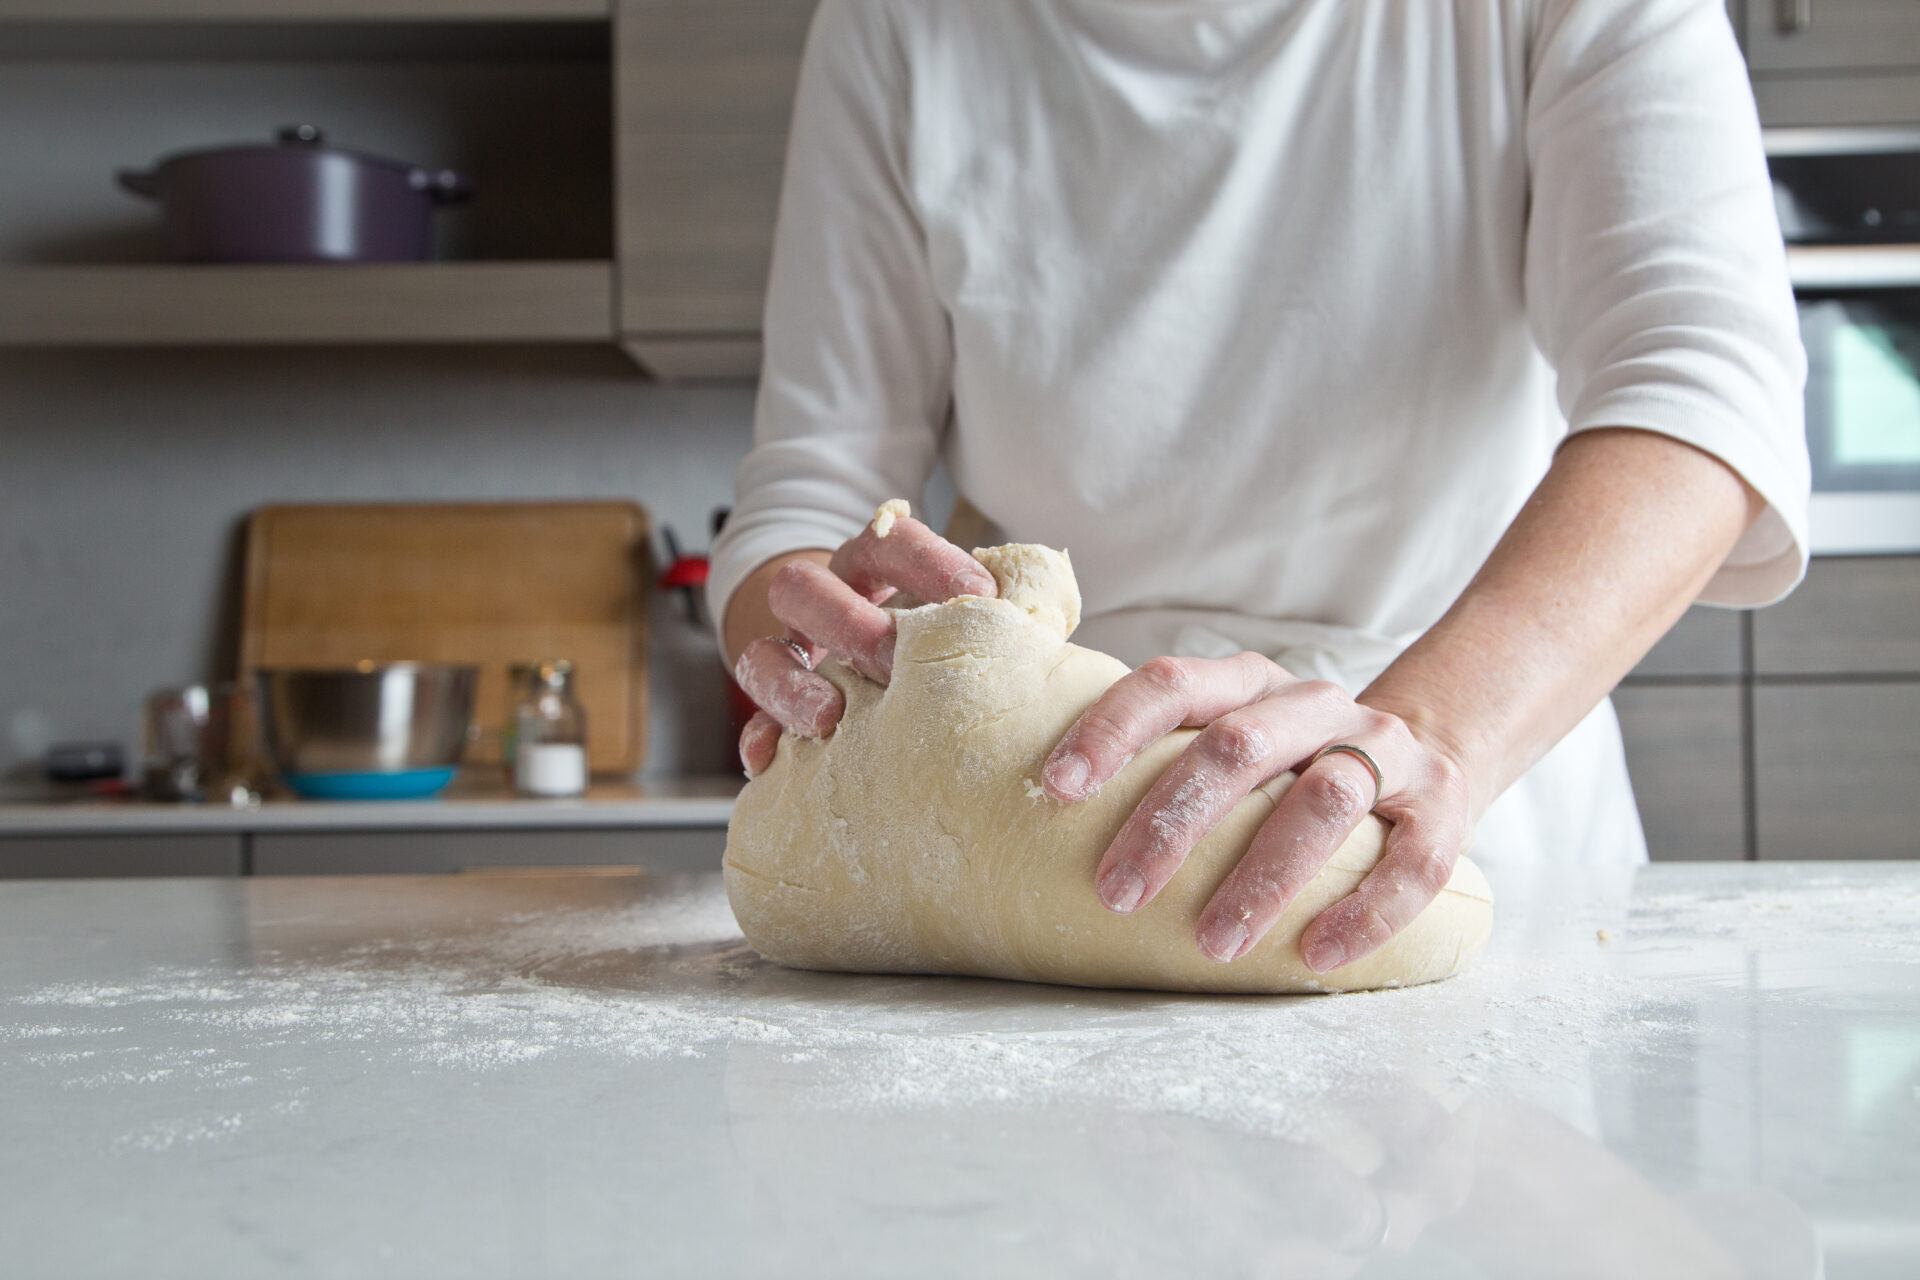 Challah Step 2: Kneading the dough